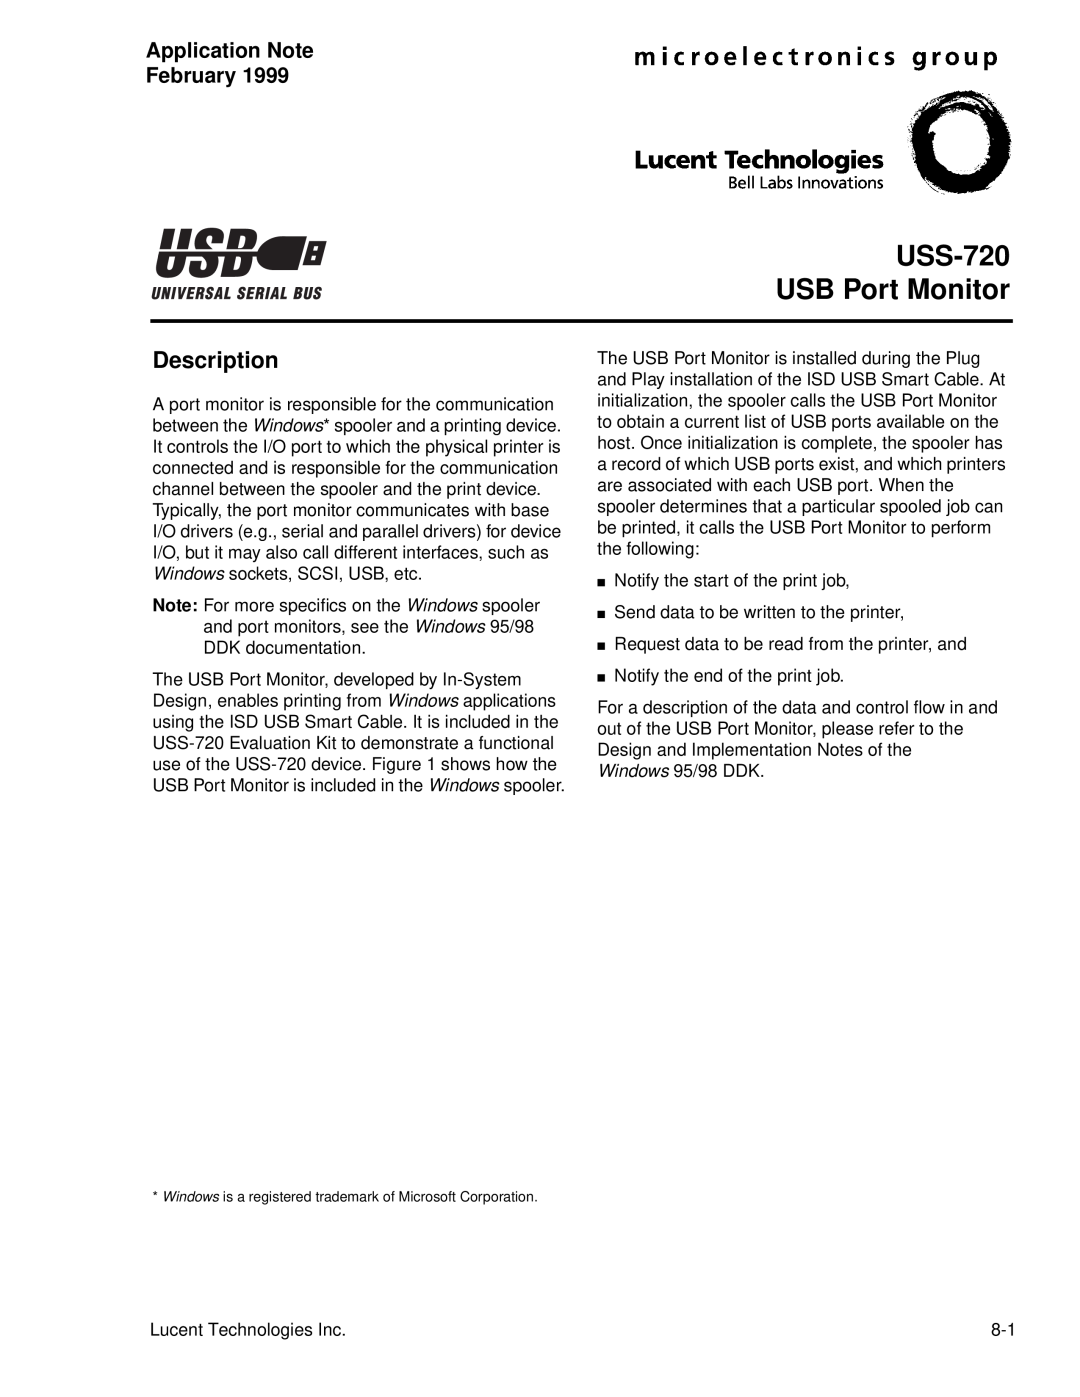 Lucent Technologies manual USS-720 USB Port Monitor, Description, Application Note February 